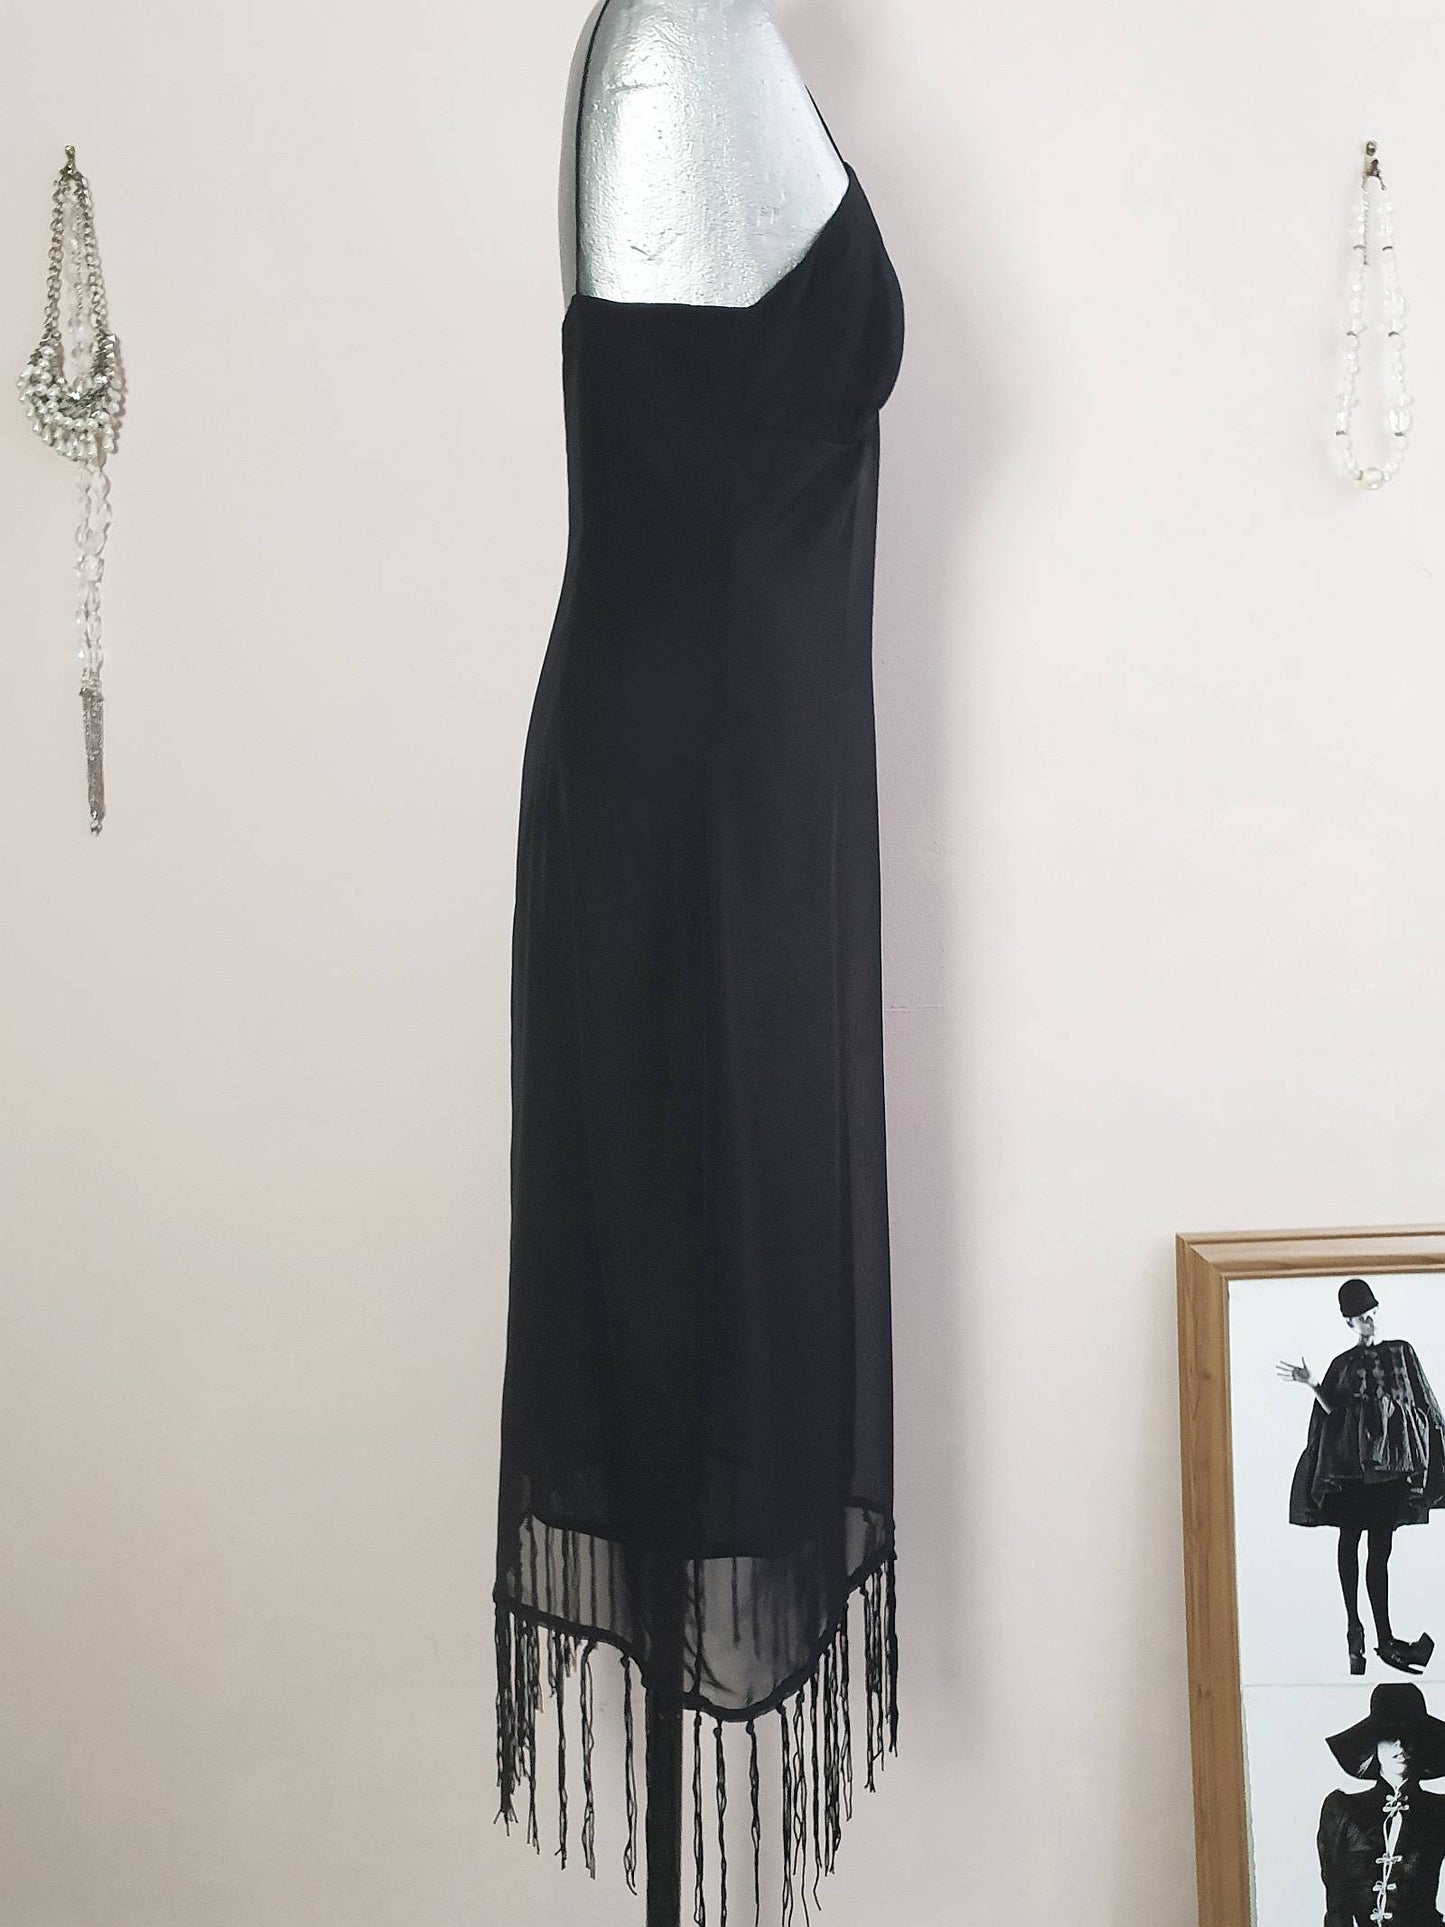 Vintage 1990s Black Chiffon Tassel Party Dress - Size 10